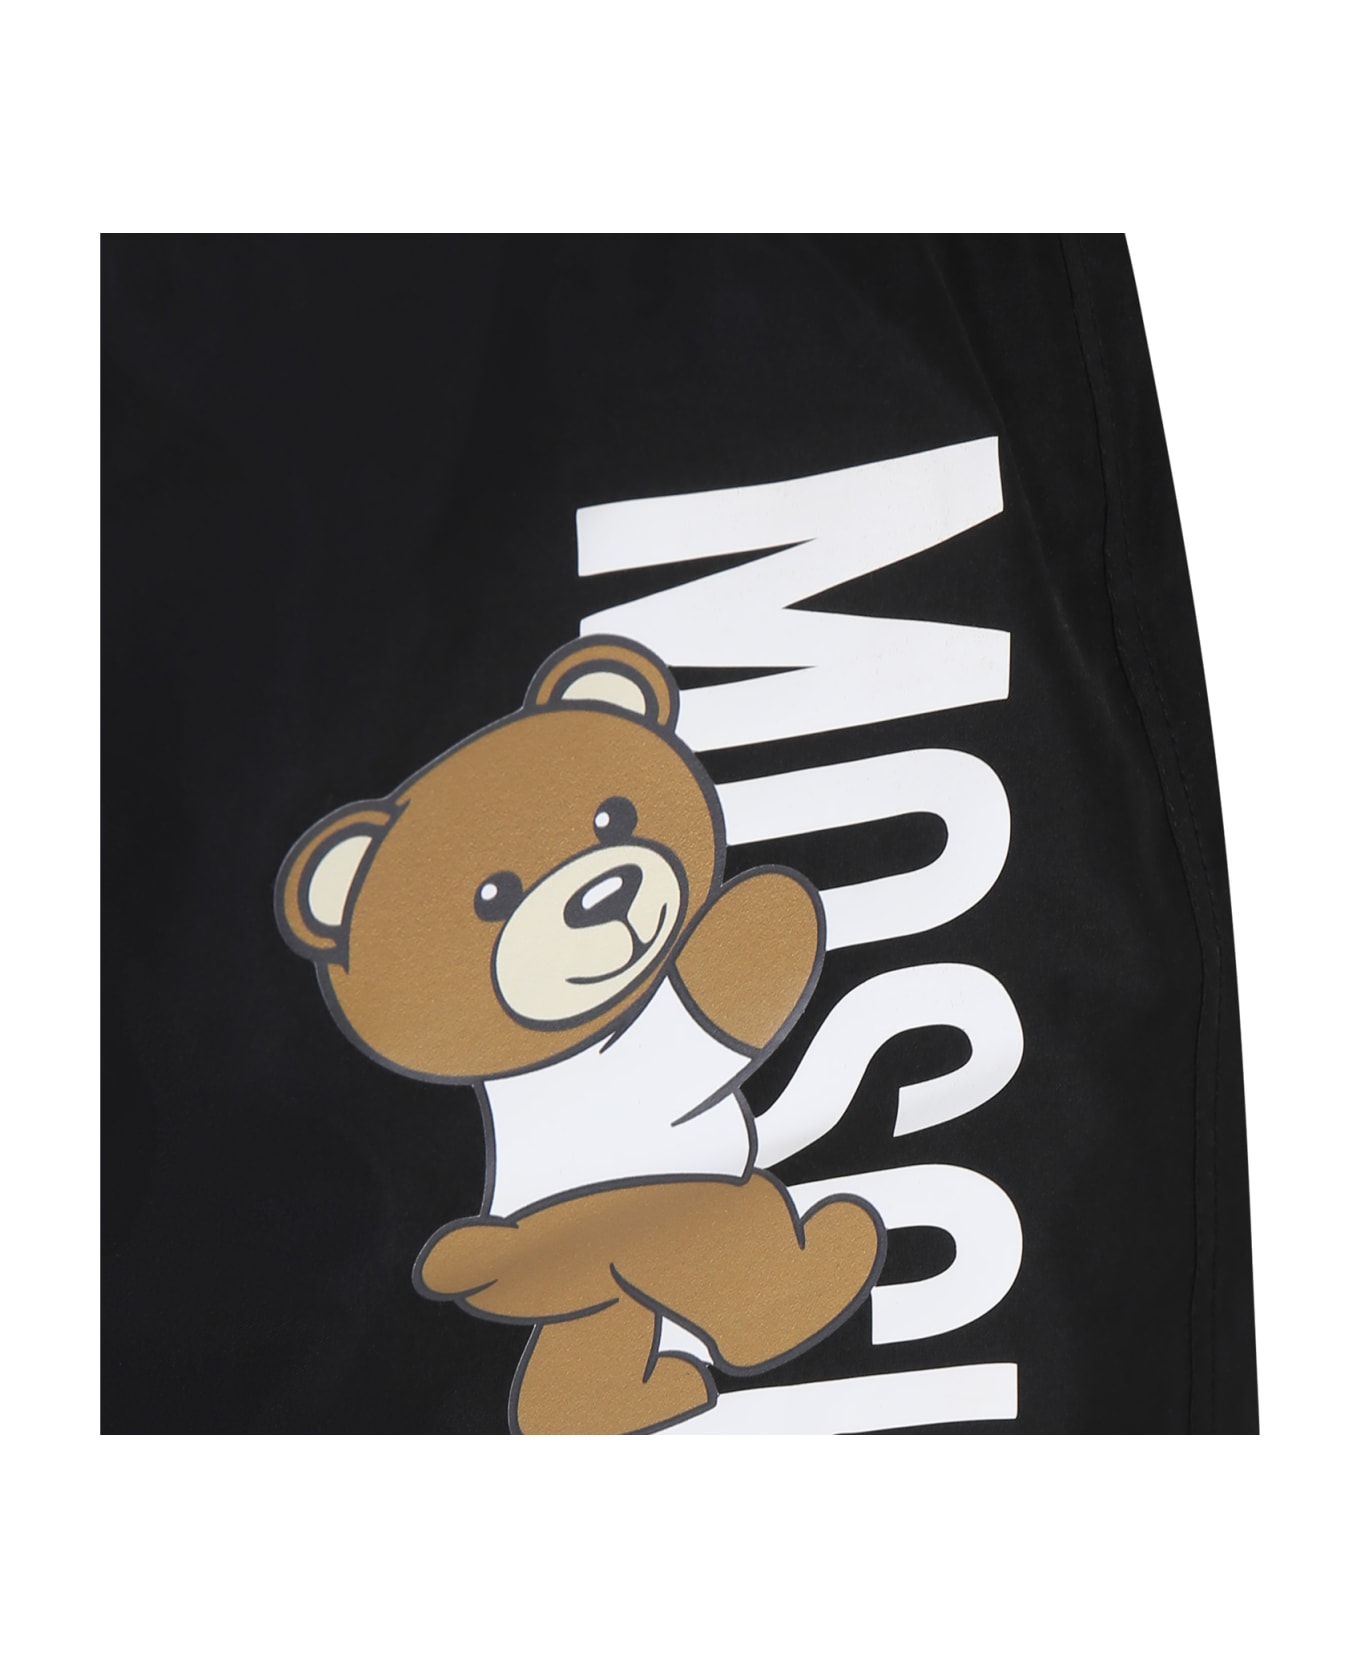 Moschino Black Swim Shorts For Boy With Teddy Bear And Logo - Black ボトムス